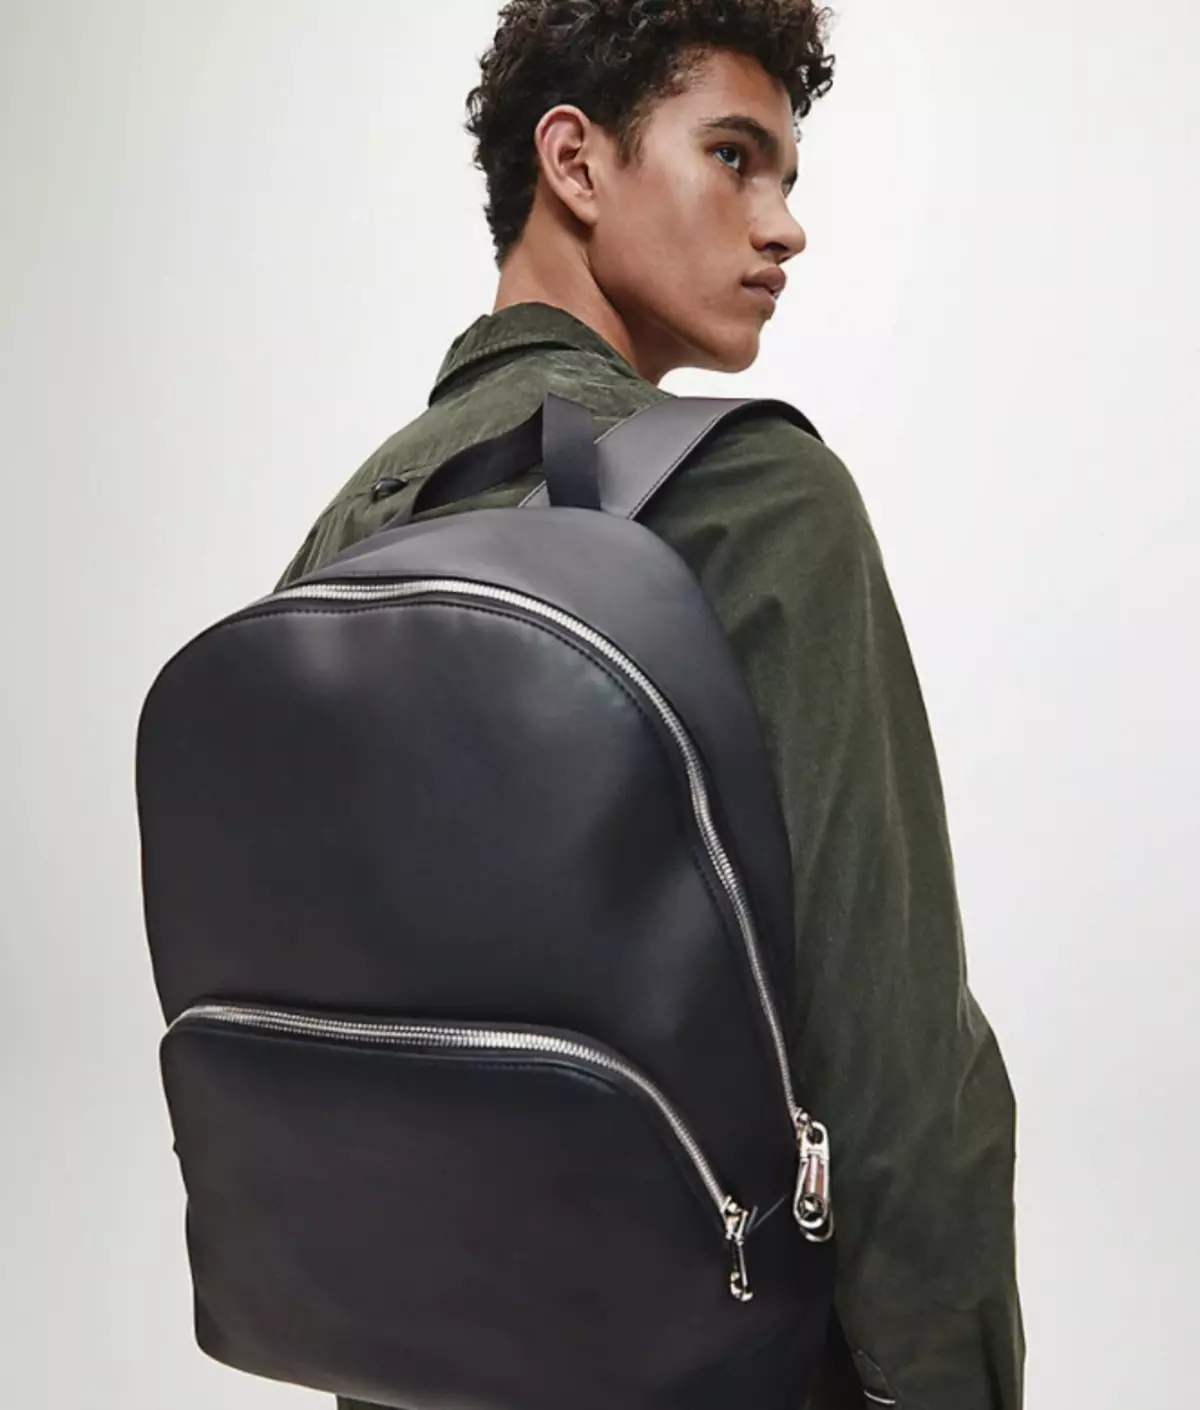 Calvin Klein Backpacks: Black Kike na Mwanaume, Leather Red, White, Yellow Kwa Monogramm na Rangi nyingine Mifuko - Backpacks 15401_36